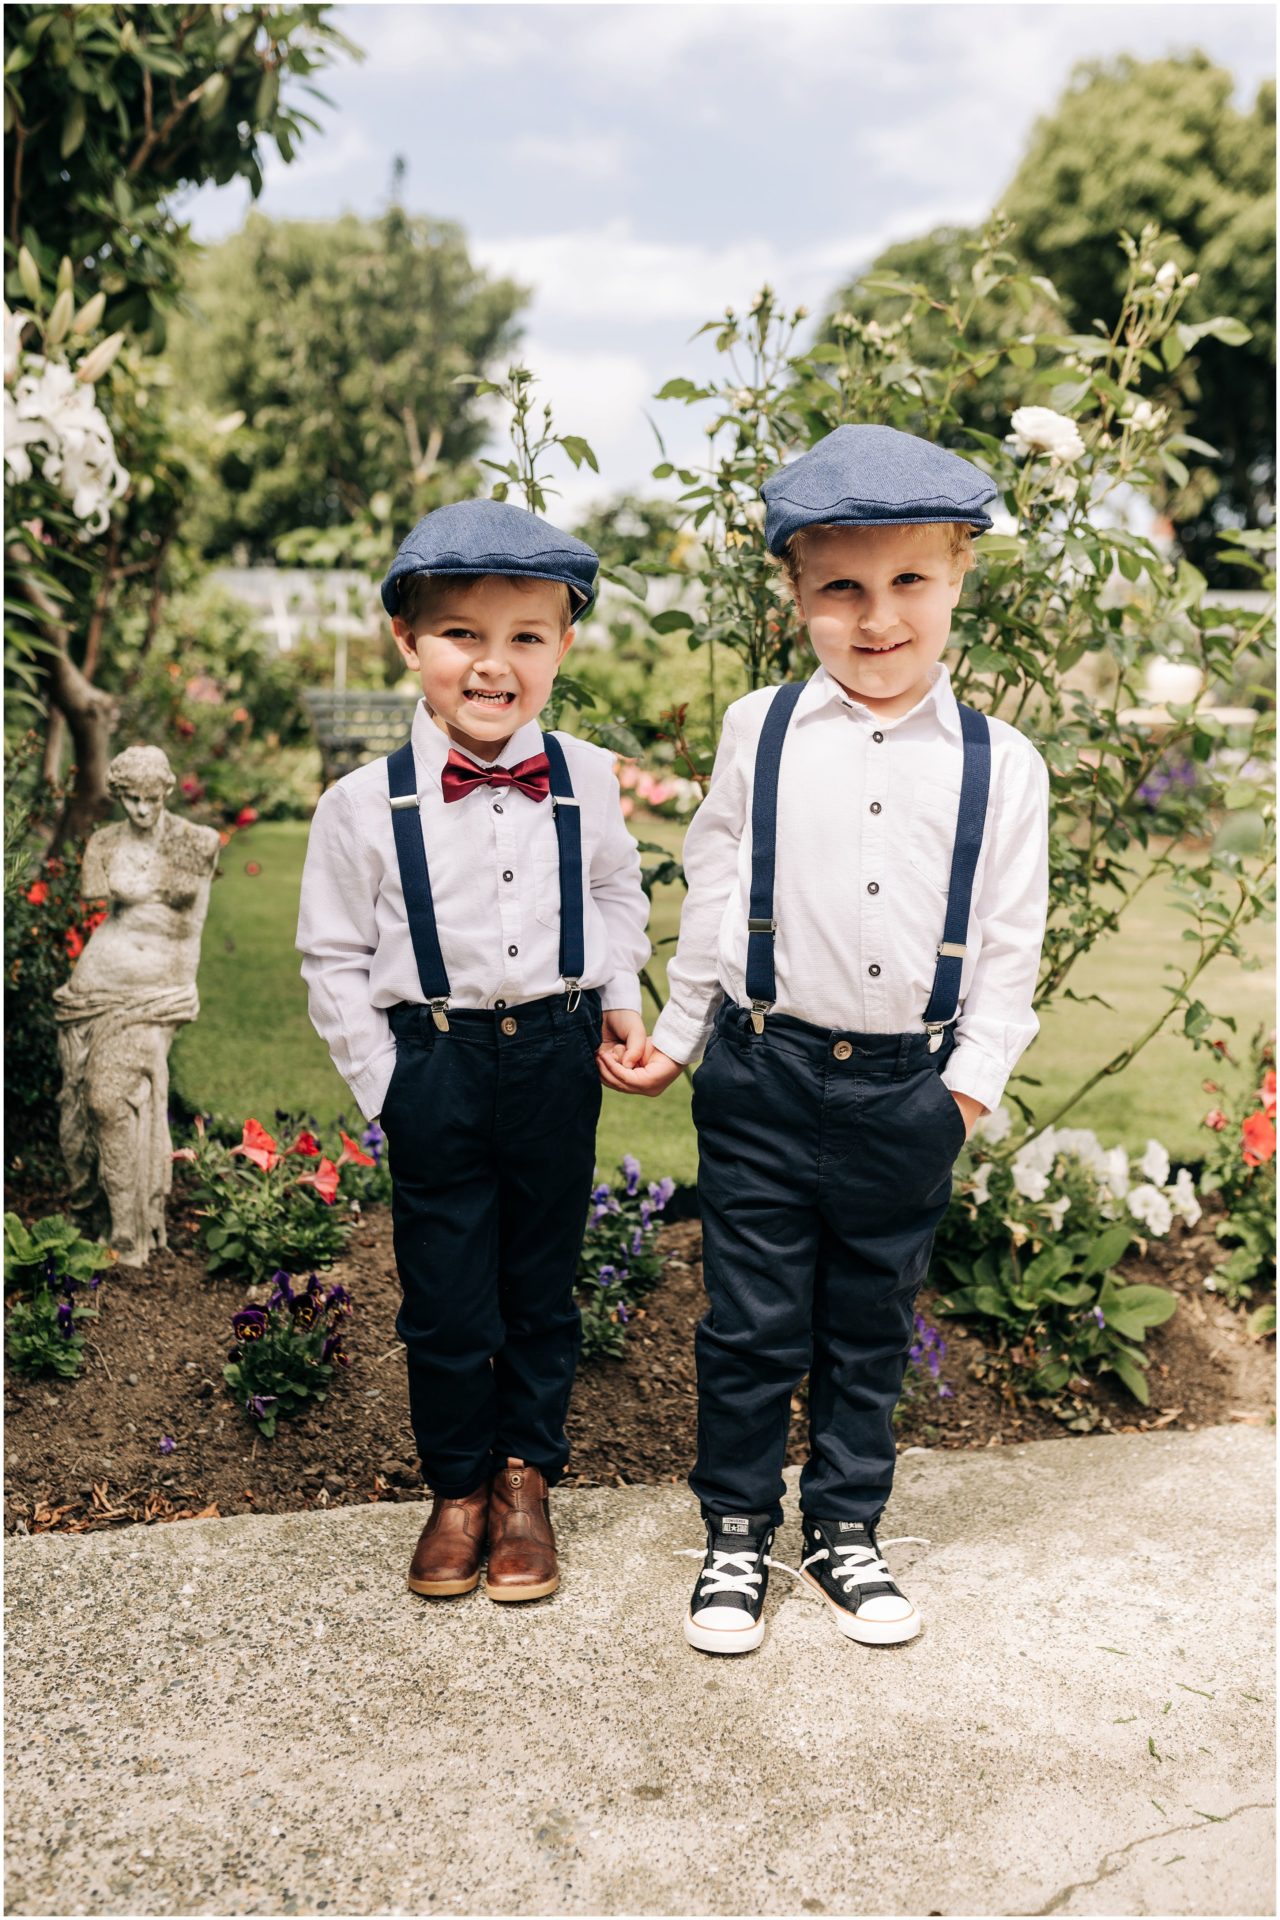 Wedding-photographer-christchurch-page-boys-suspenders